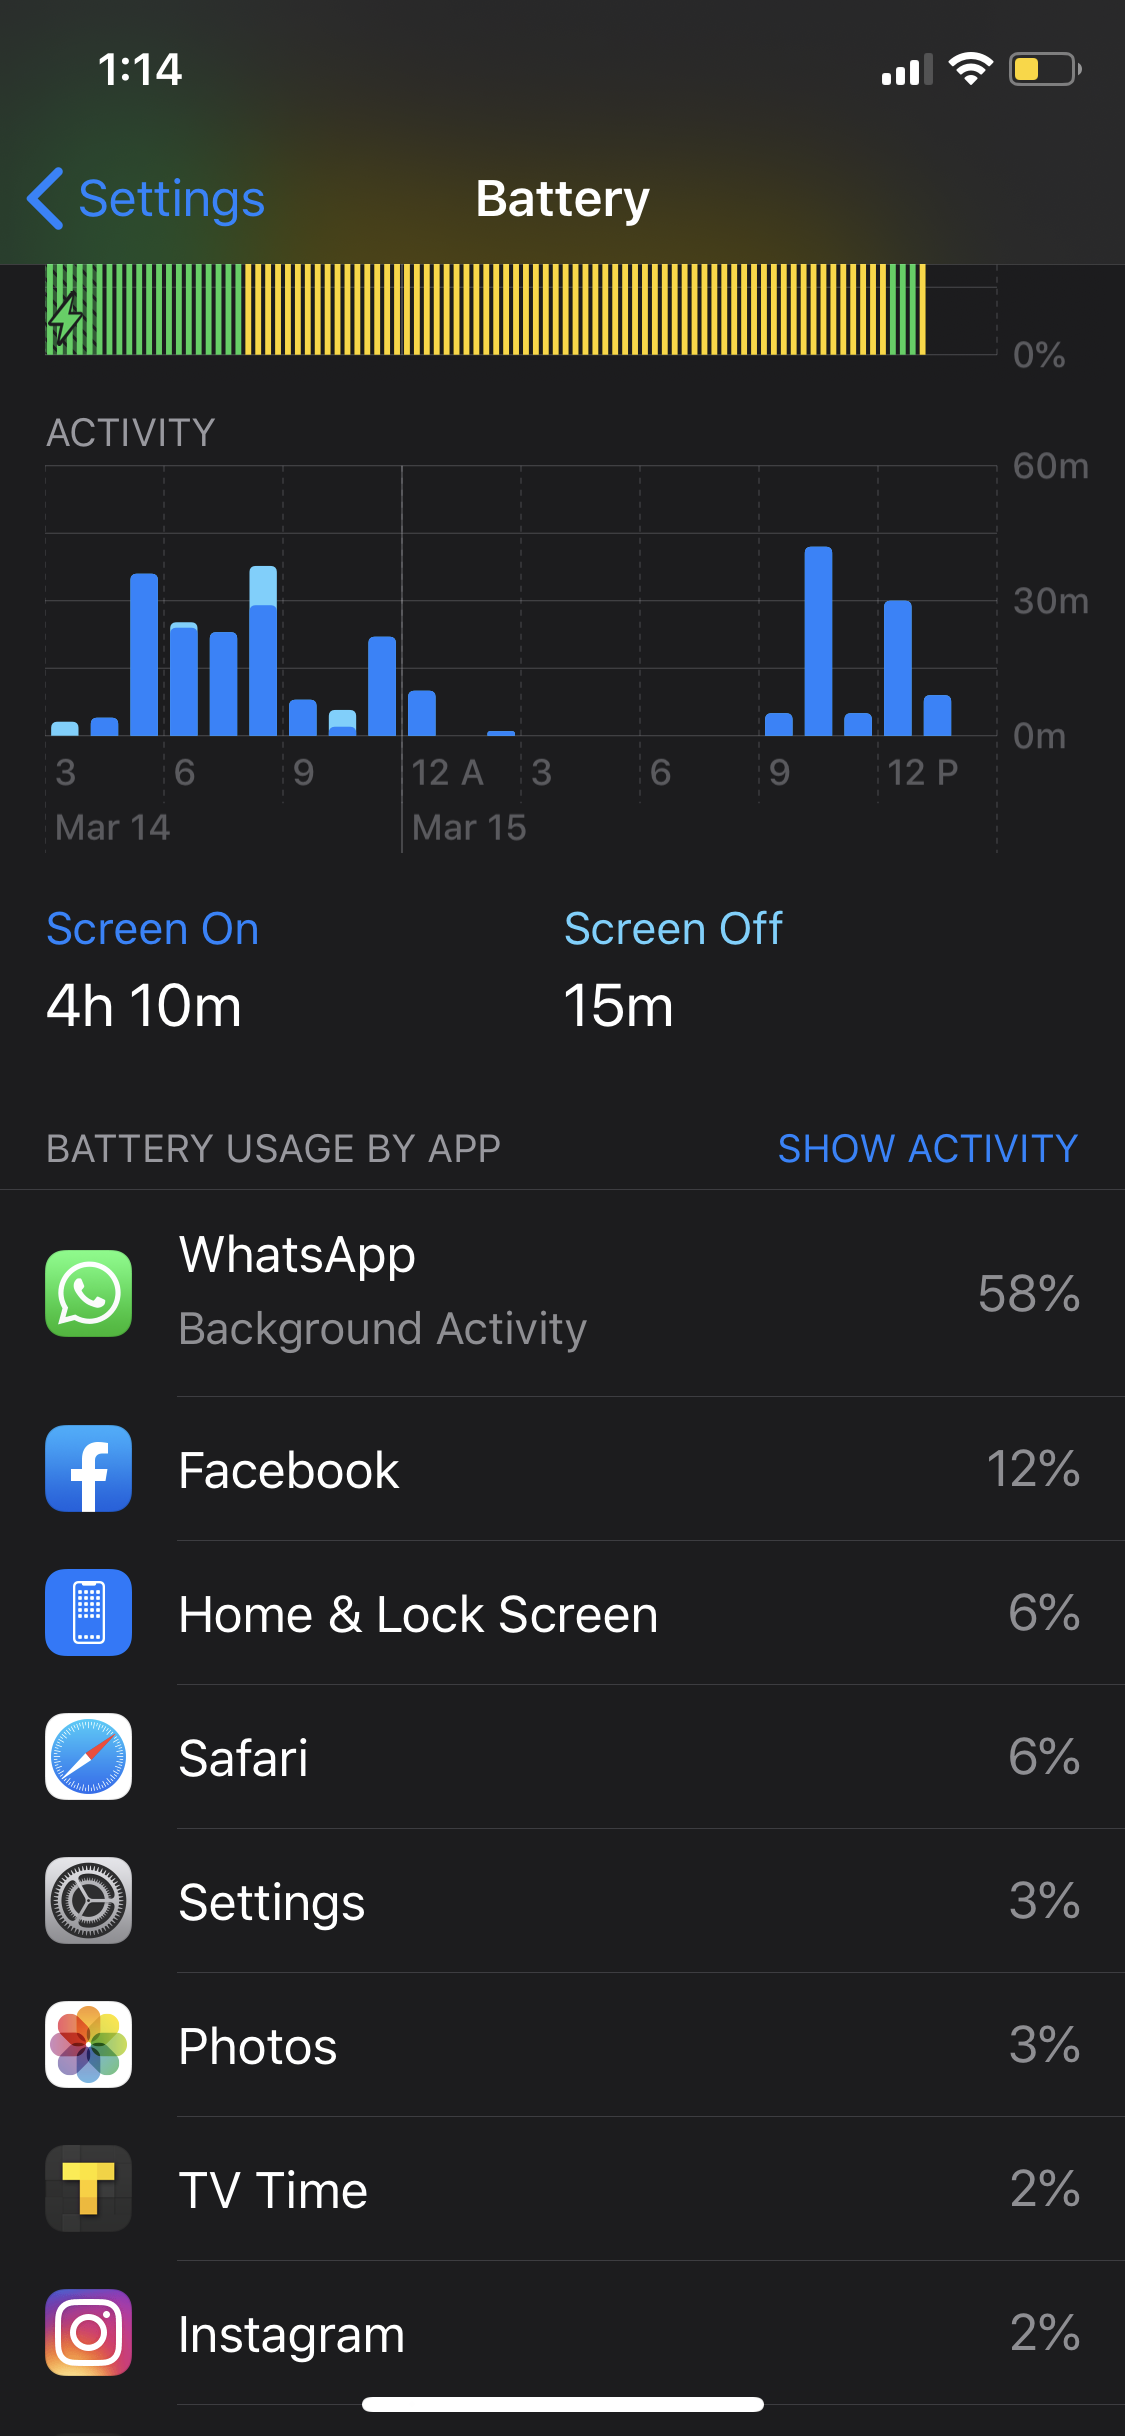 Does WhatsApp drain battery iPhone?